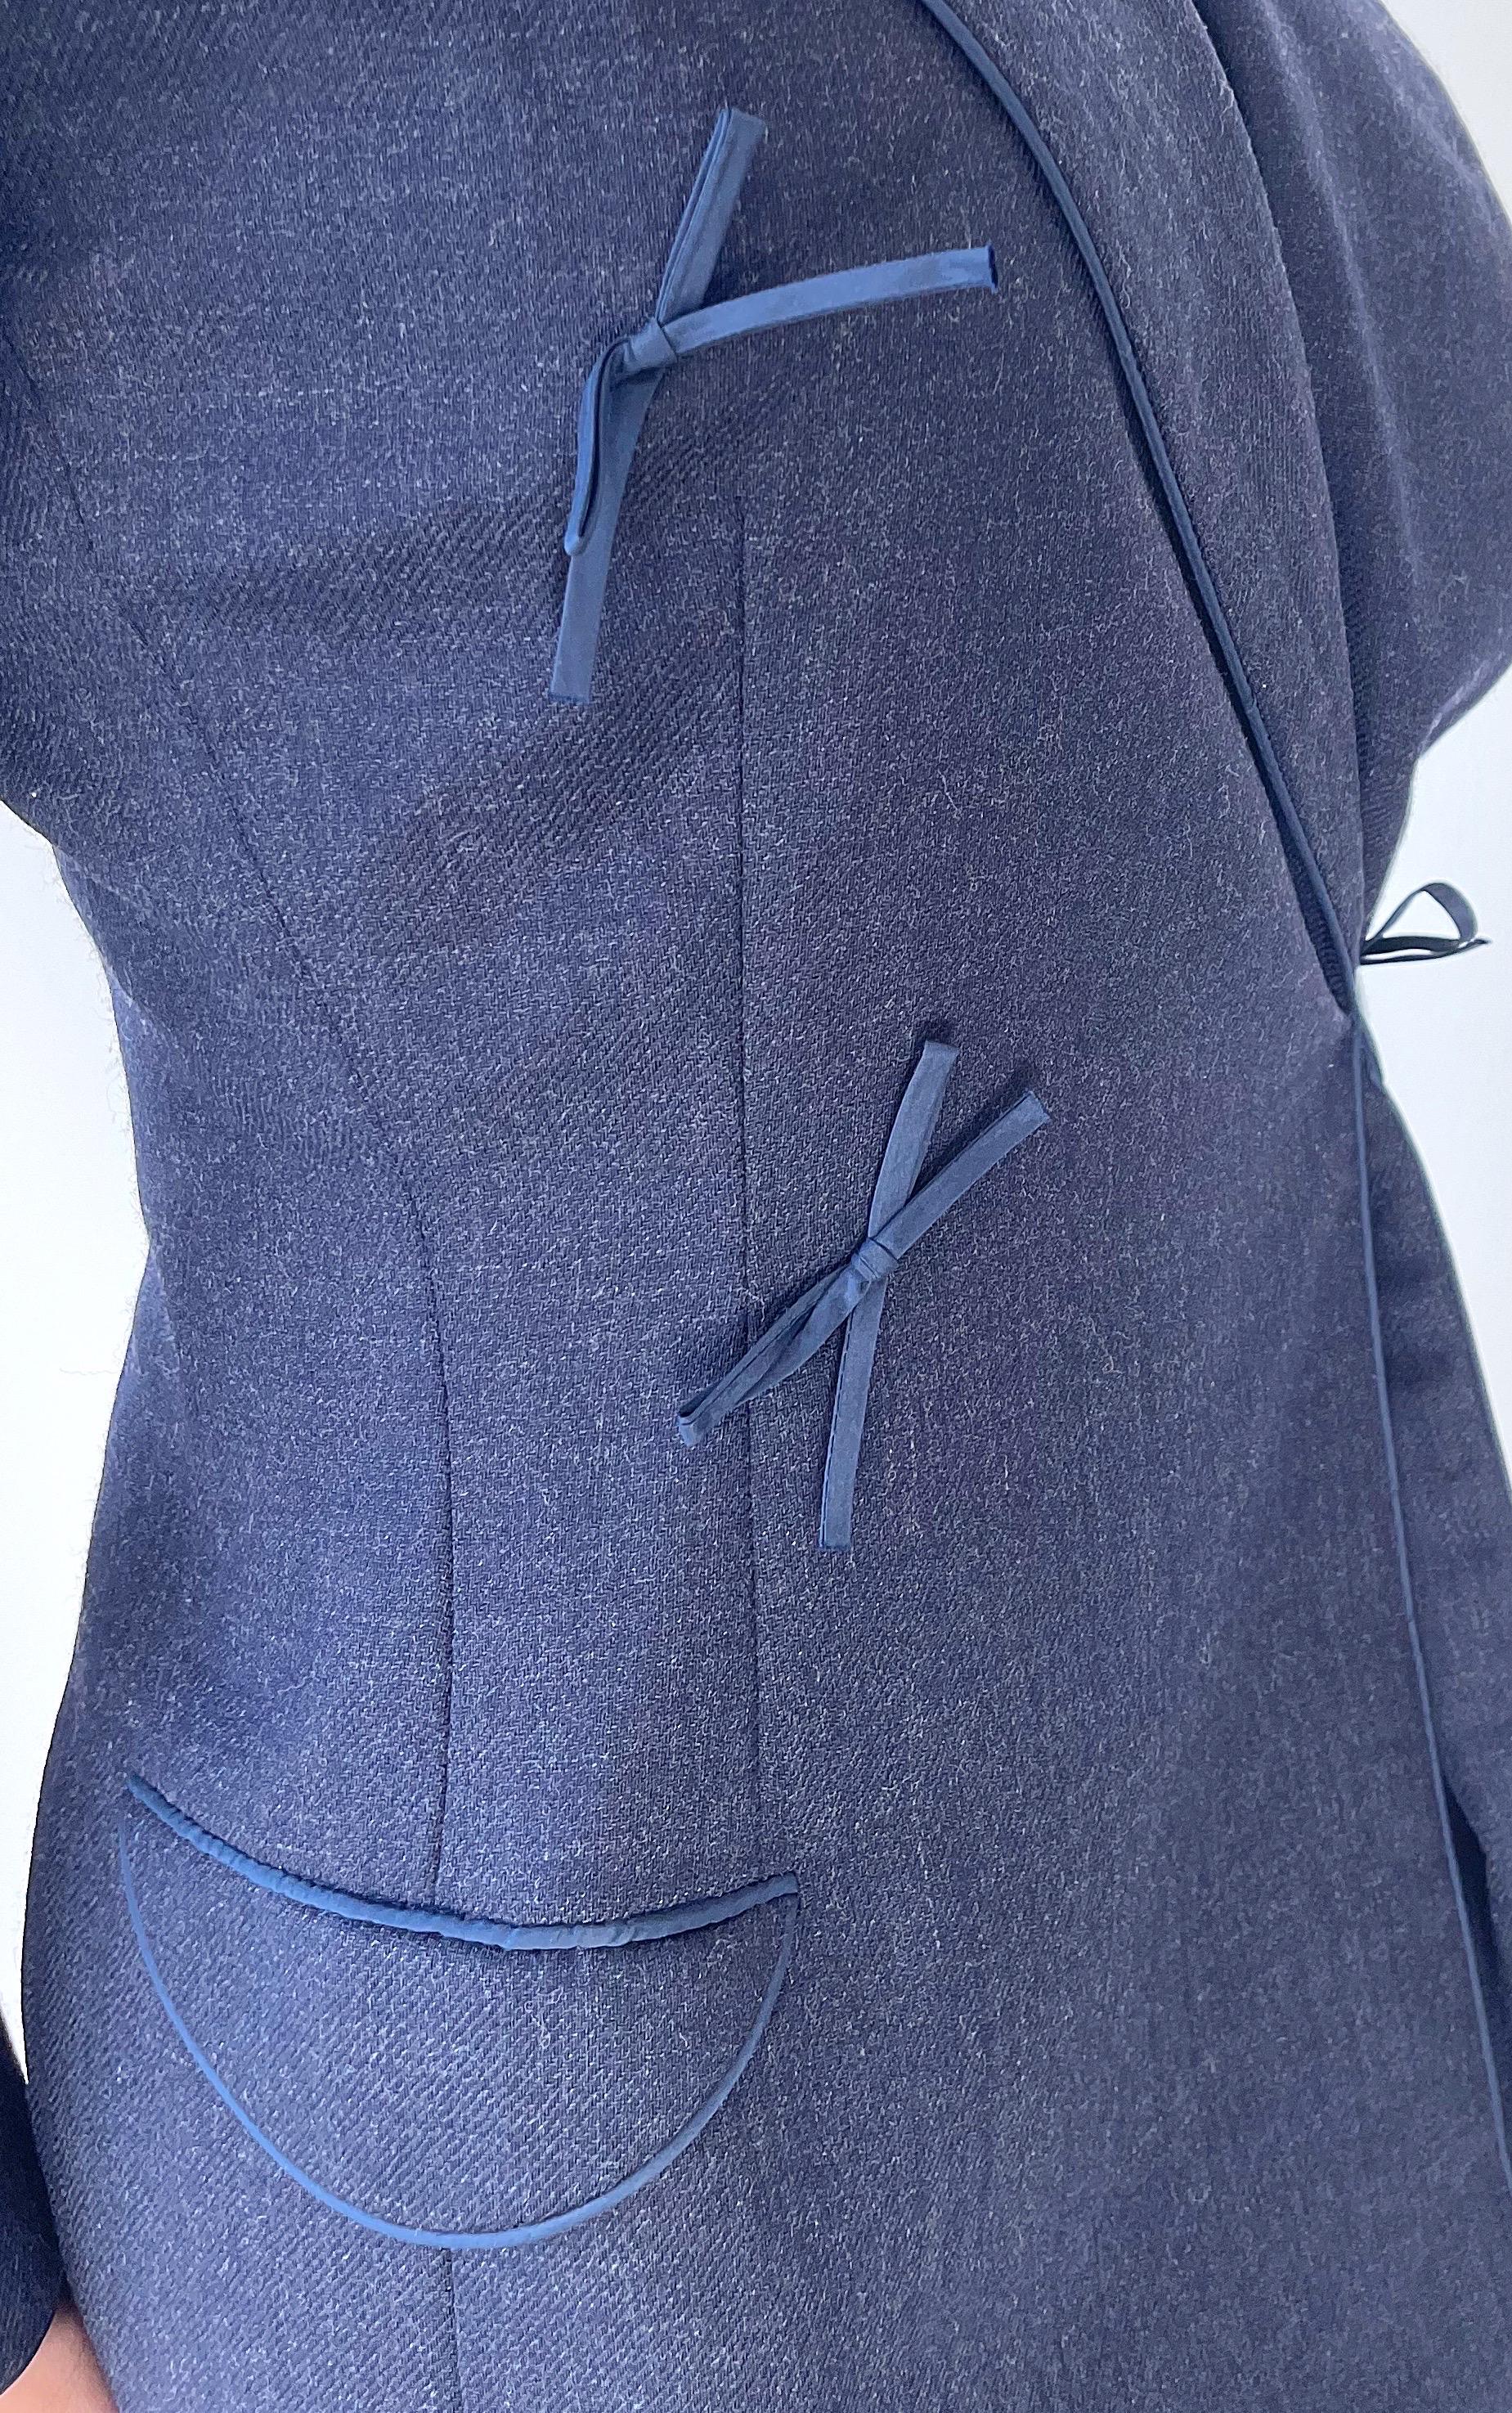 1990s Isaac Mizrahi Navy Blue Denim Like Size 6 8 Vintage 90s Wrap Blazer Jacket For Sale 1